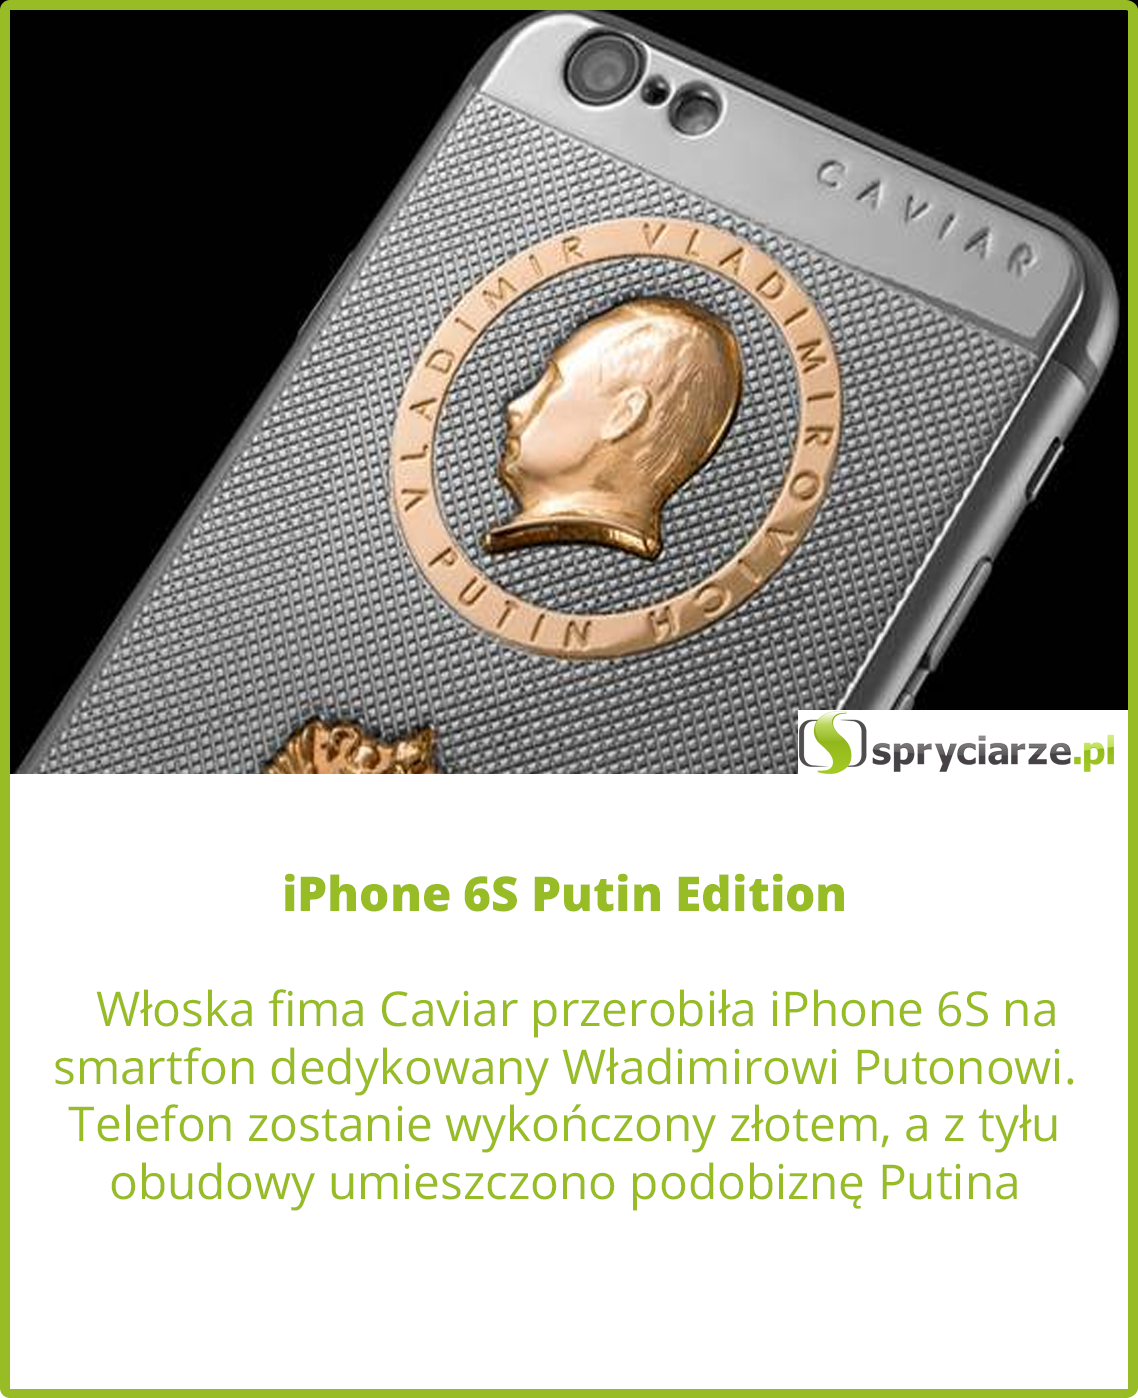 iPhone 6S Putin Edition